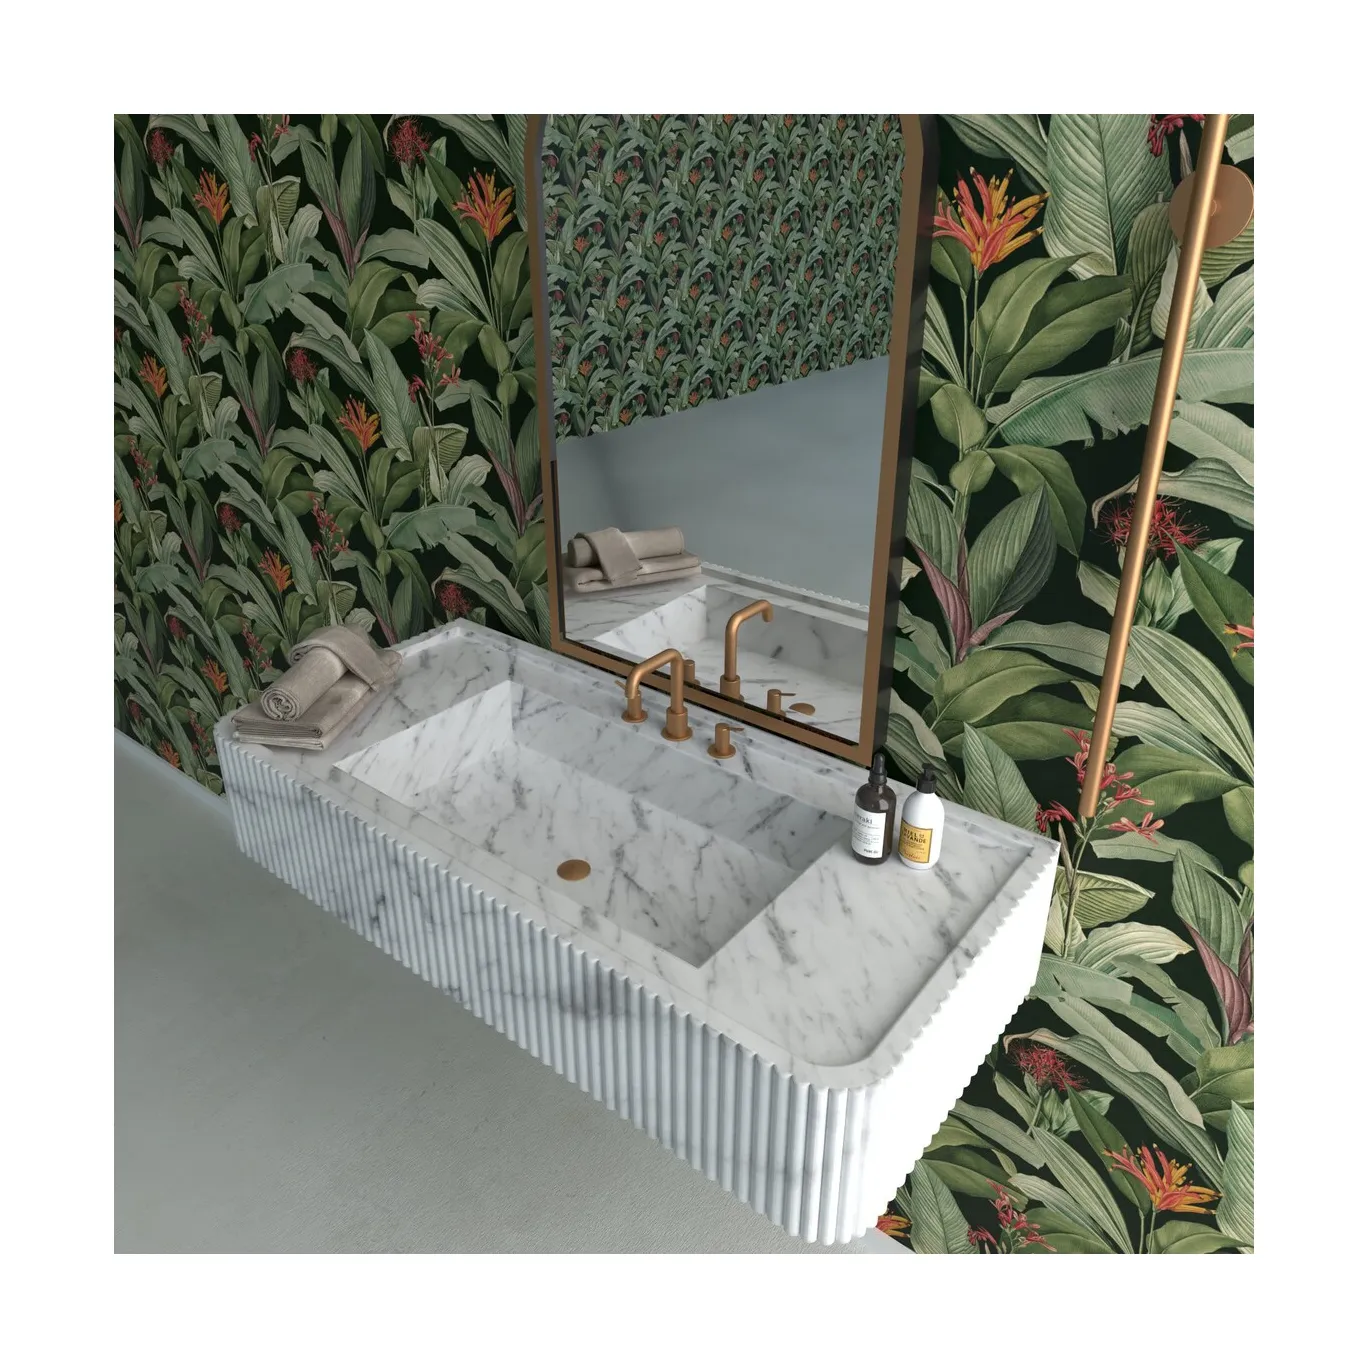 SHIHUI Bathroom Powder Room Vanity Wall Mounted Floating Cararra White Fluted Marble Vanities Bathroom Fluted Single Basin Sink